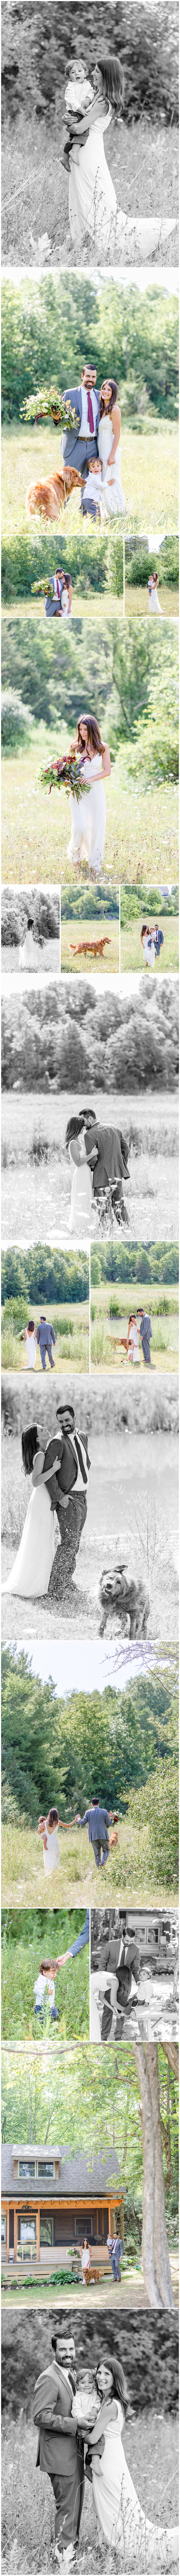 Vermont wedding collage photography